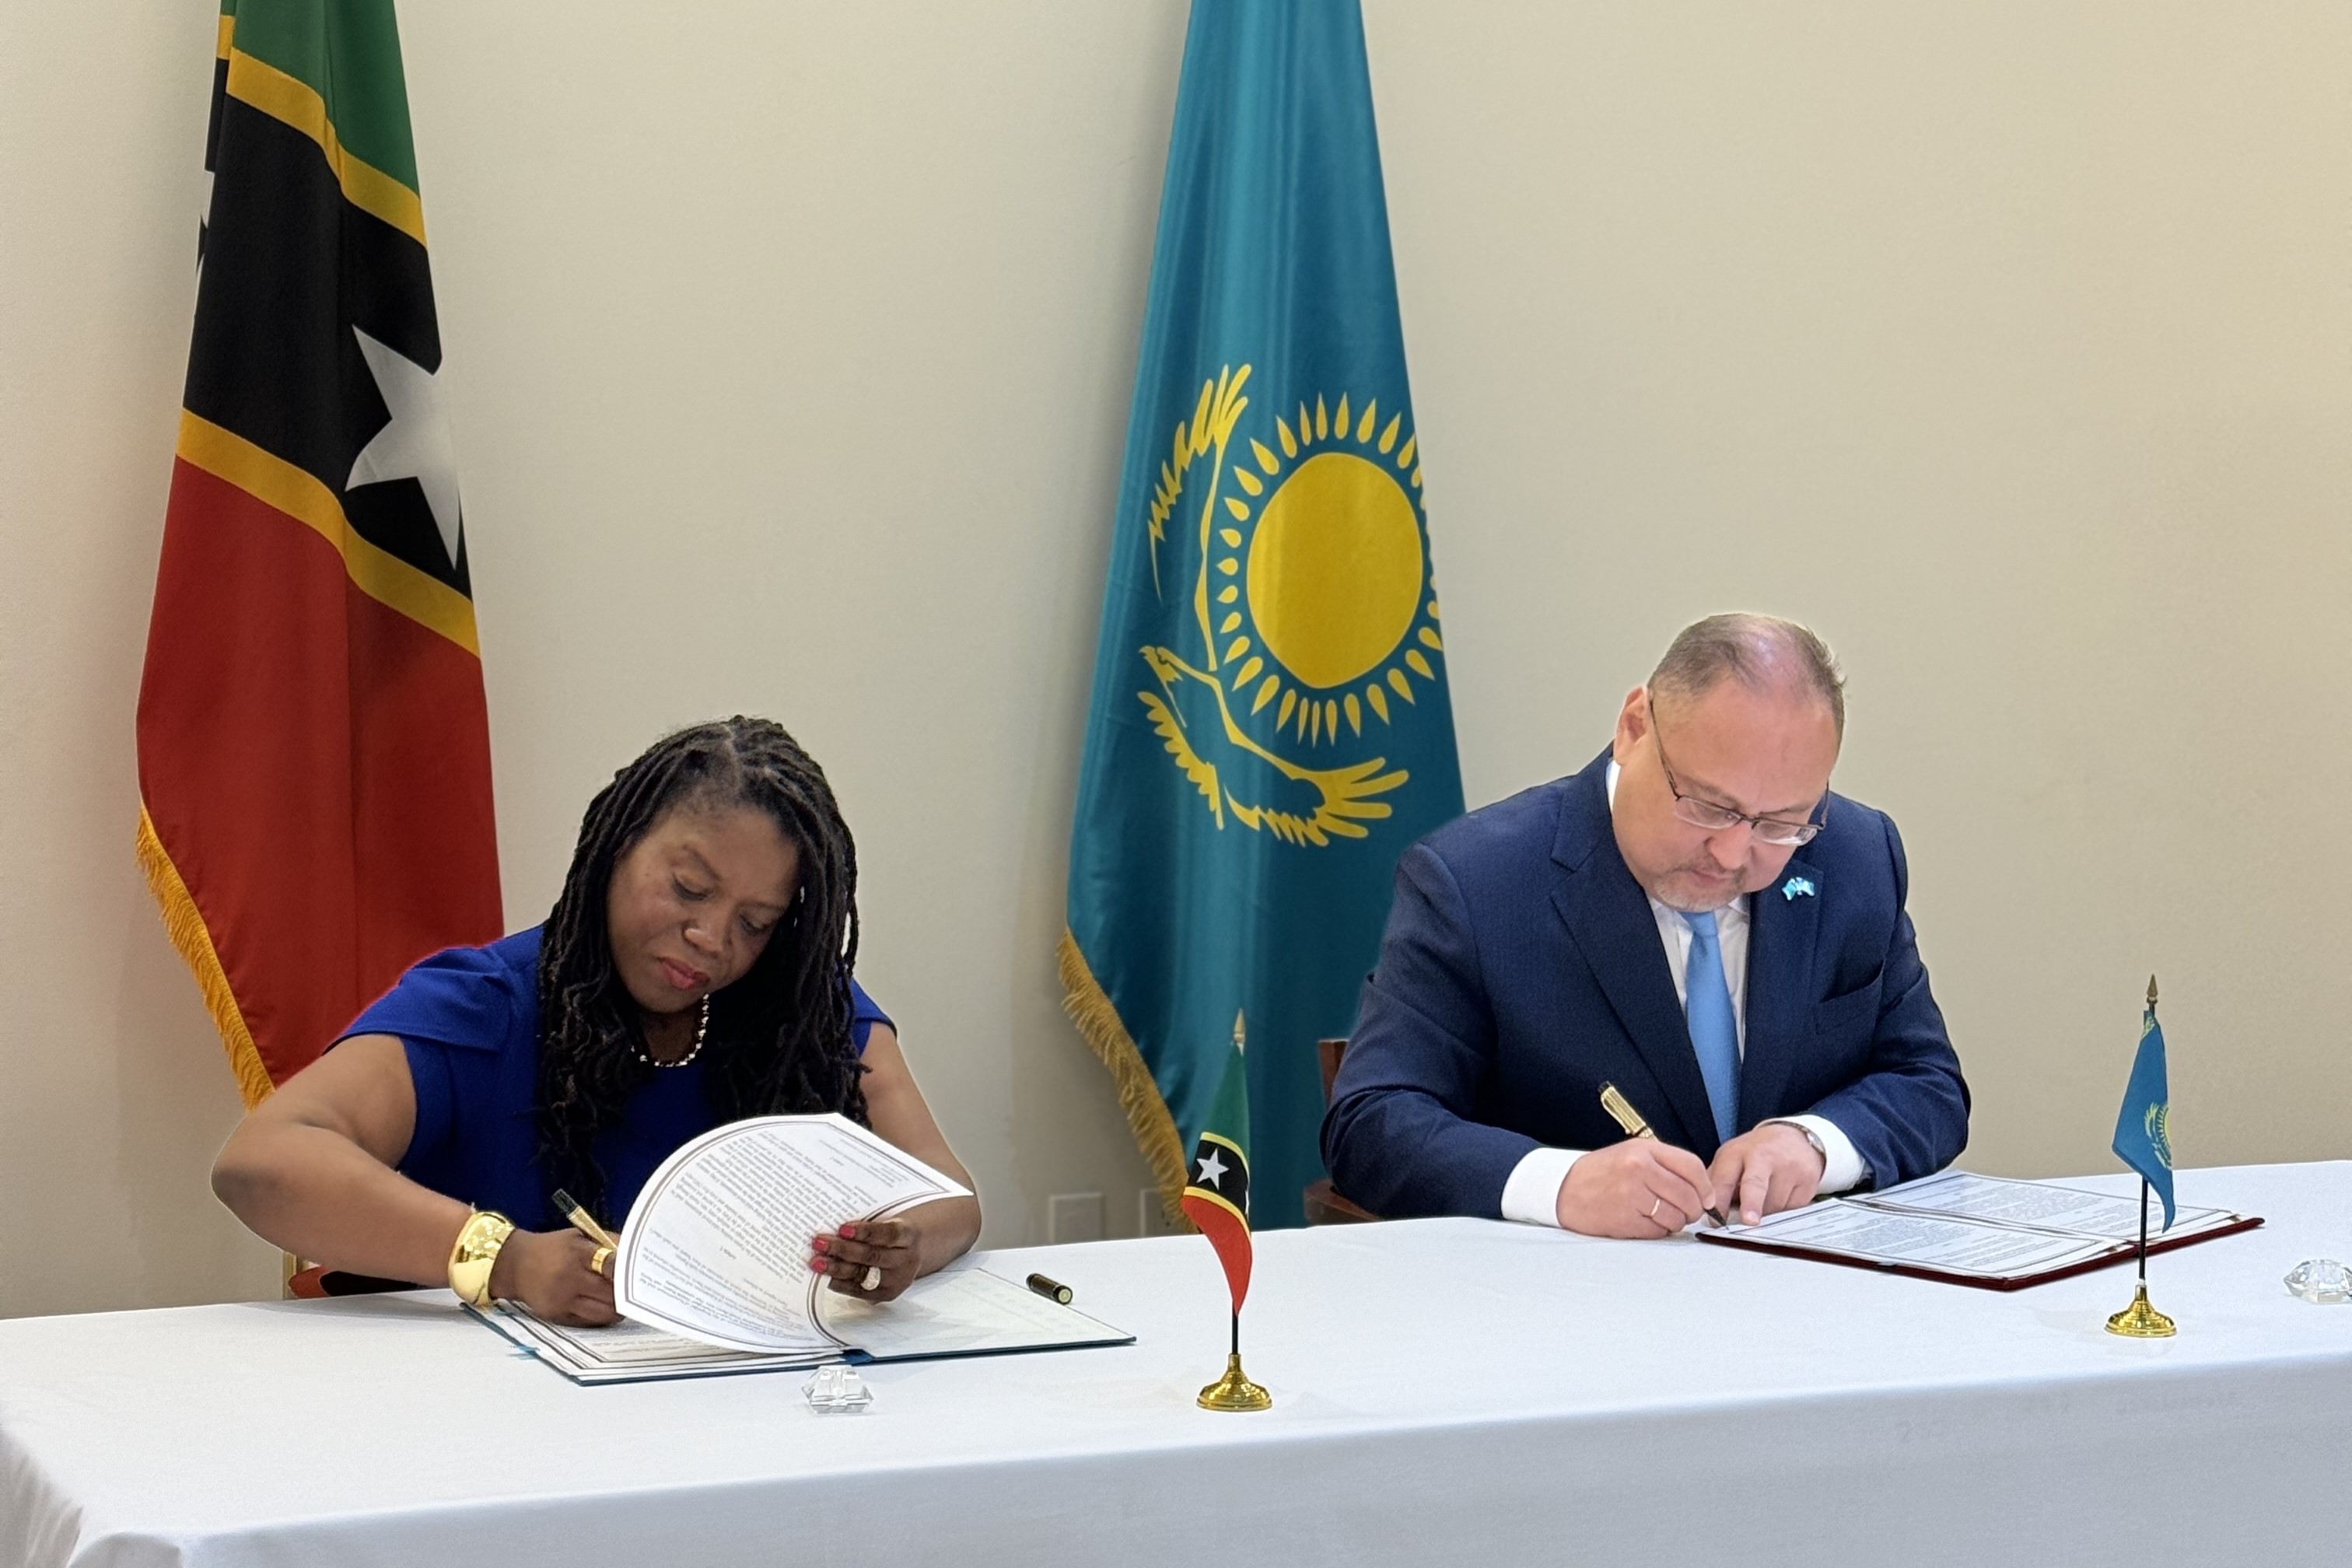 Kazakhstan and Saint Kitts and Nevis signed Agreement on visa-free regime